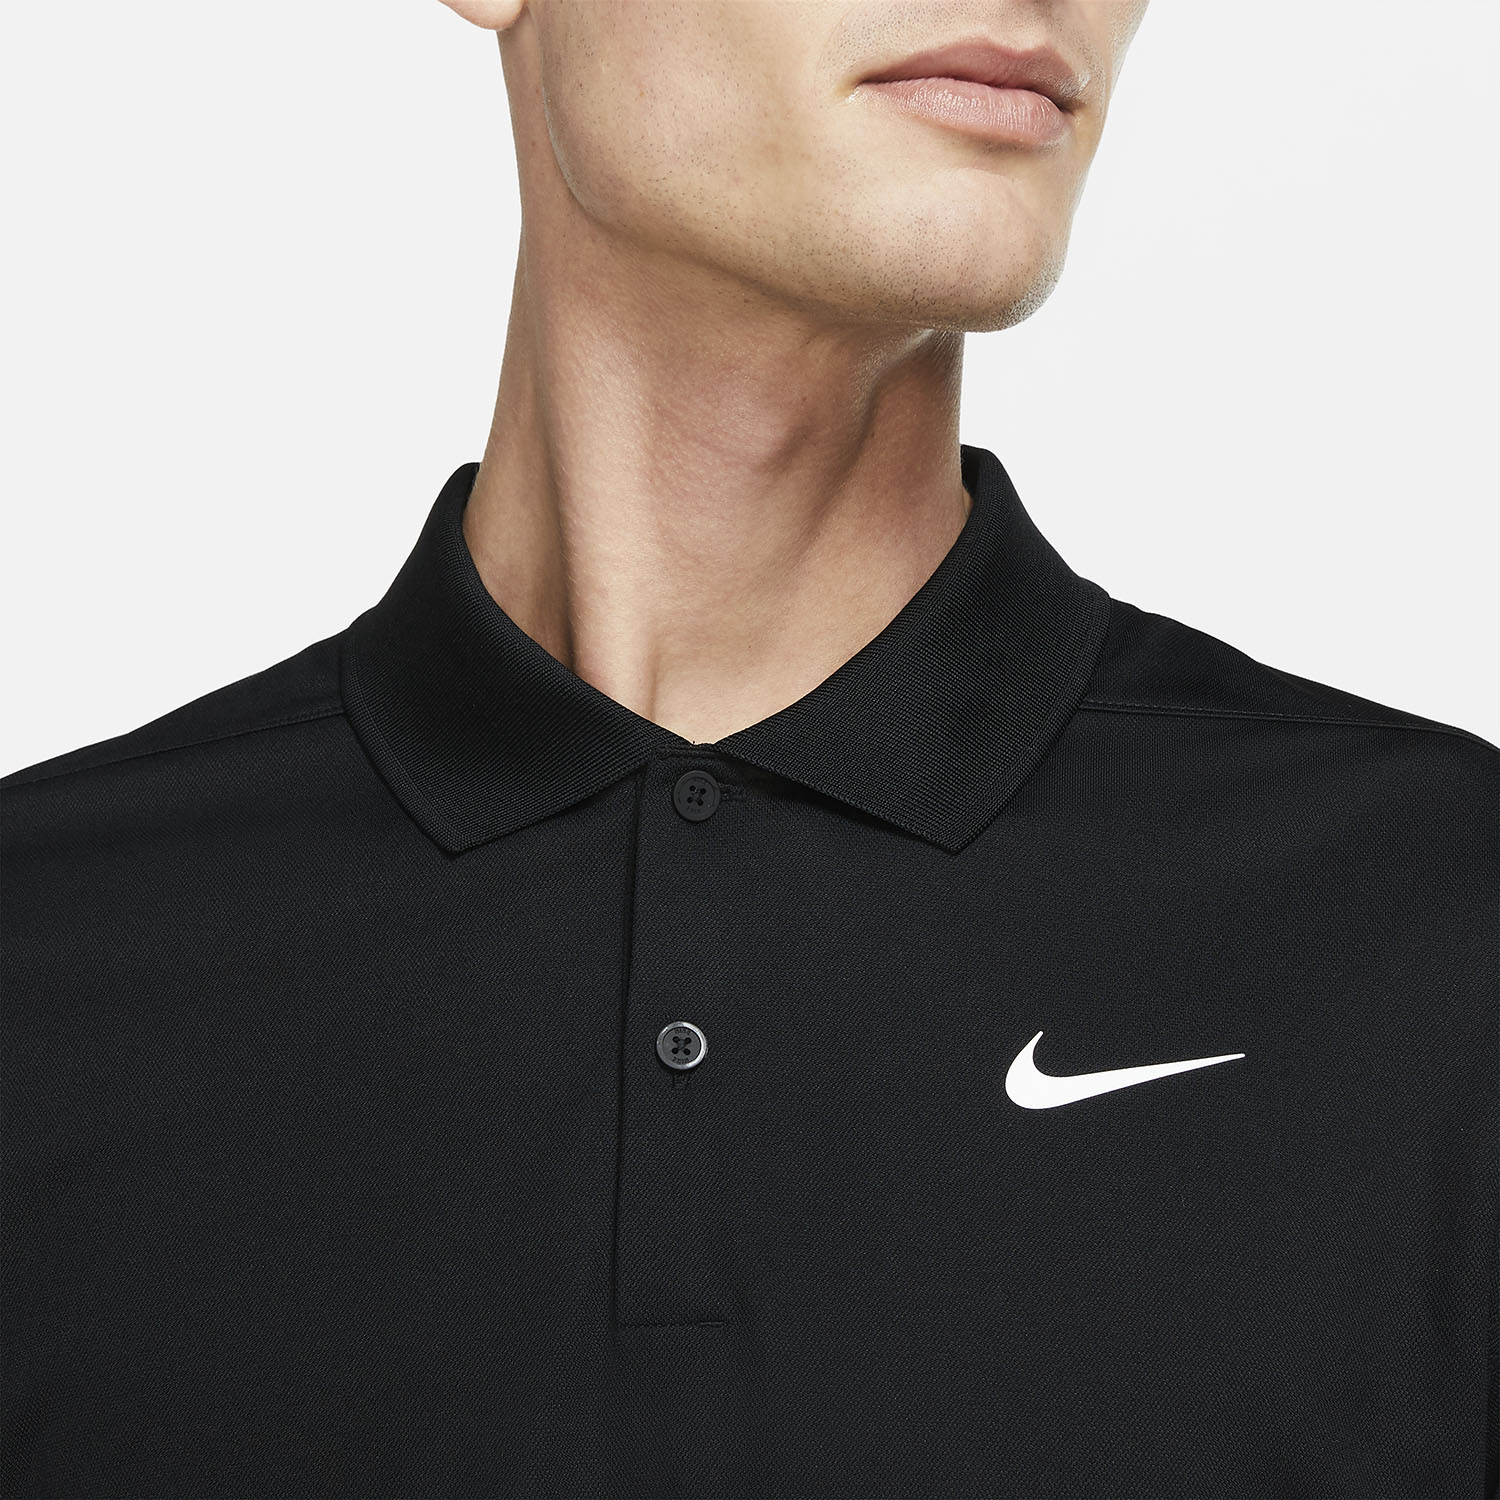 Nike Dri-FIT Classic Polo - Black/White